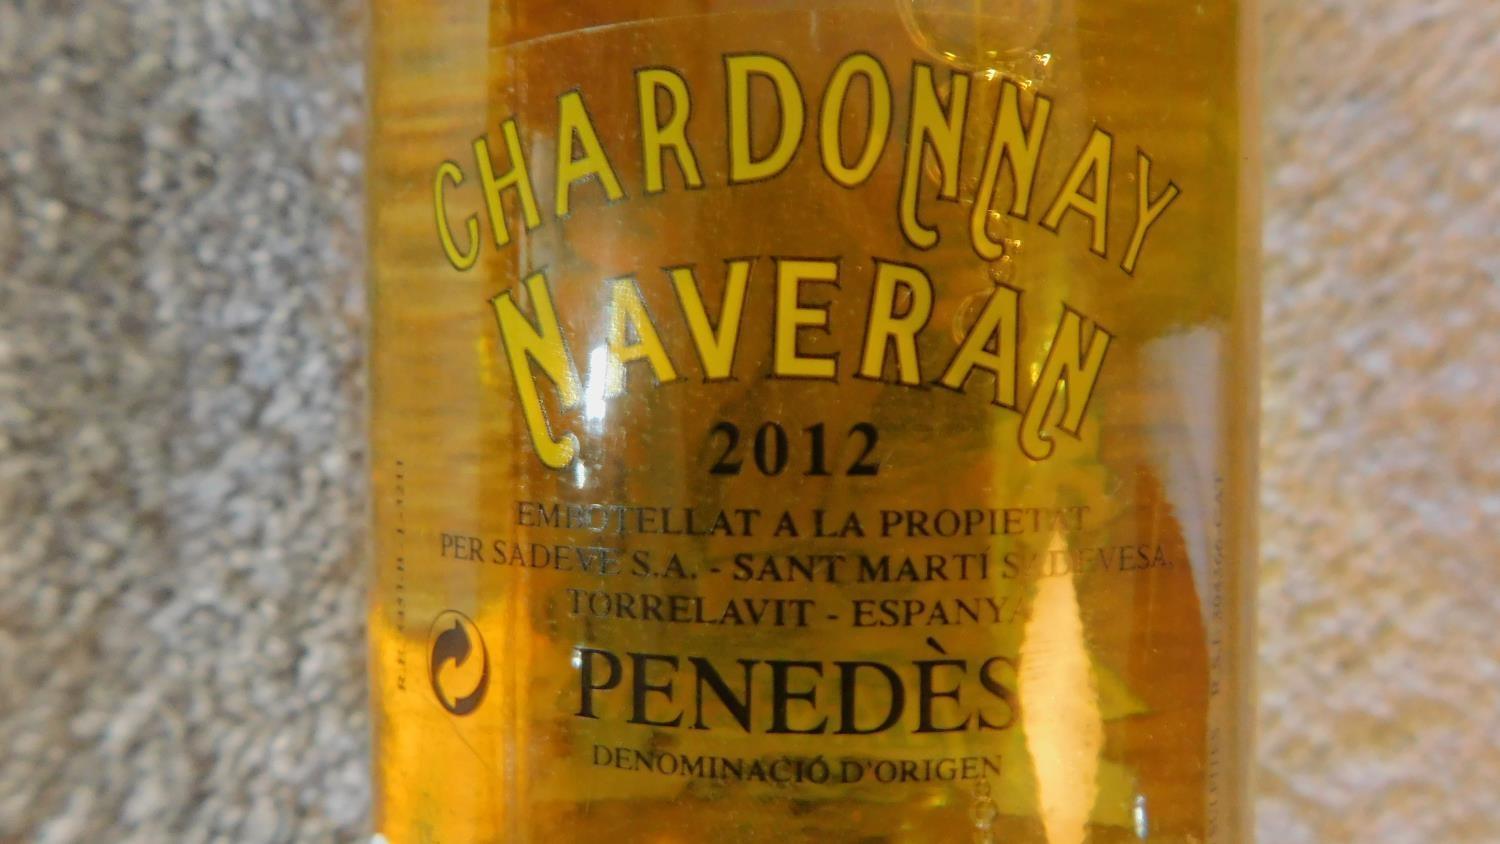 Twenty Four bottles of Spanish chardonnay, Manuela de Navaran 2012. - Image 4 of 4